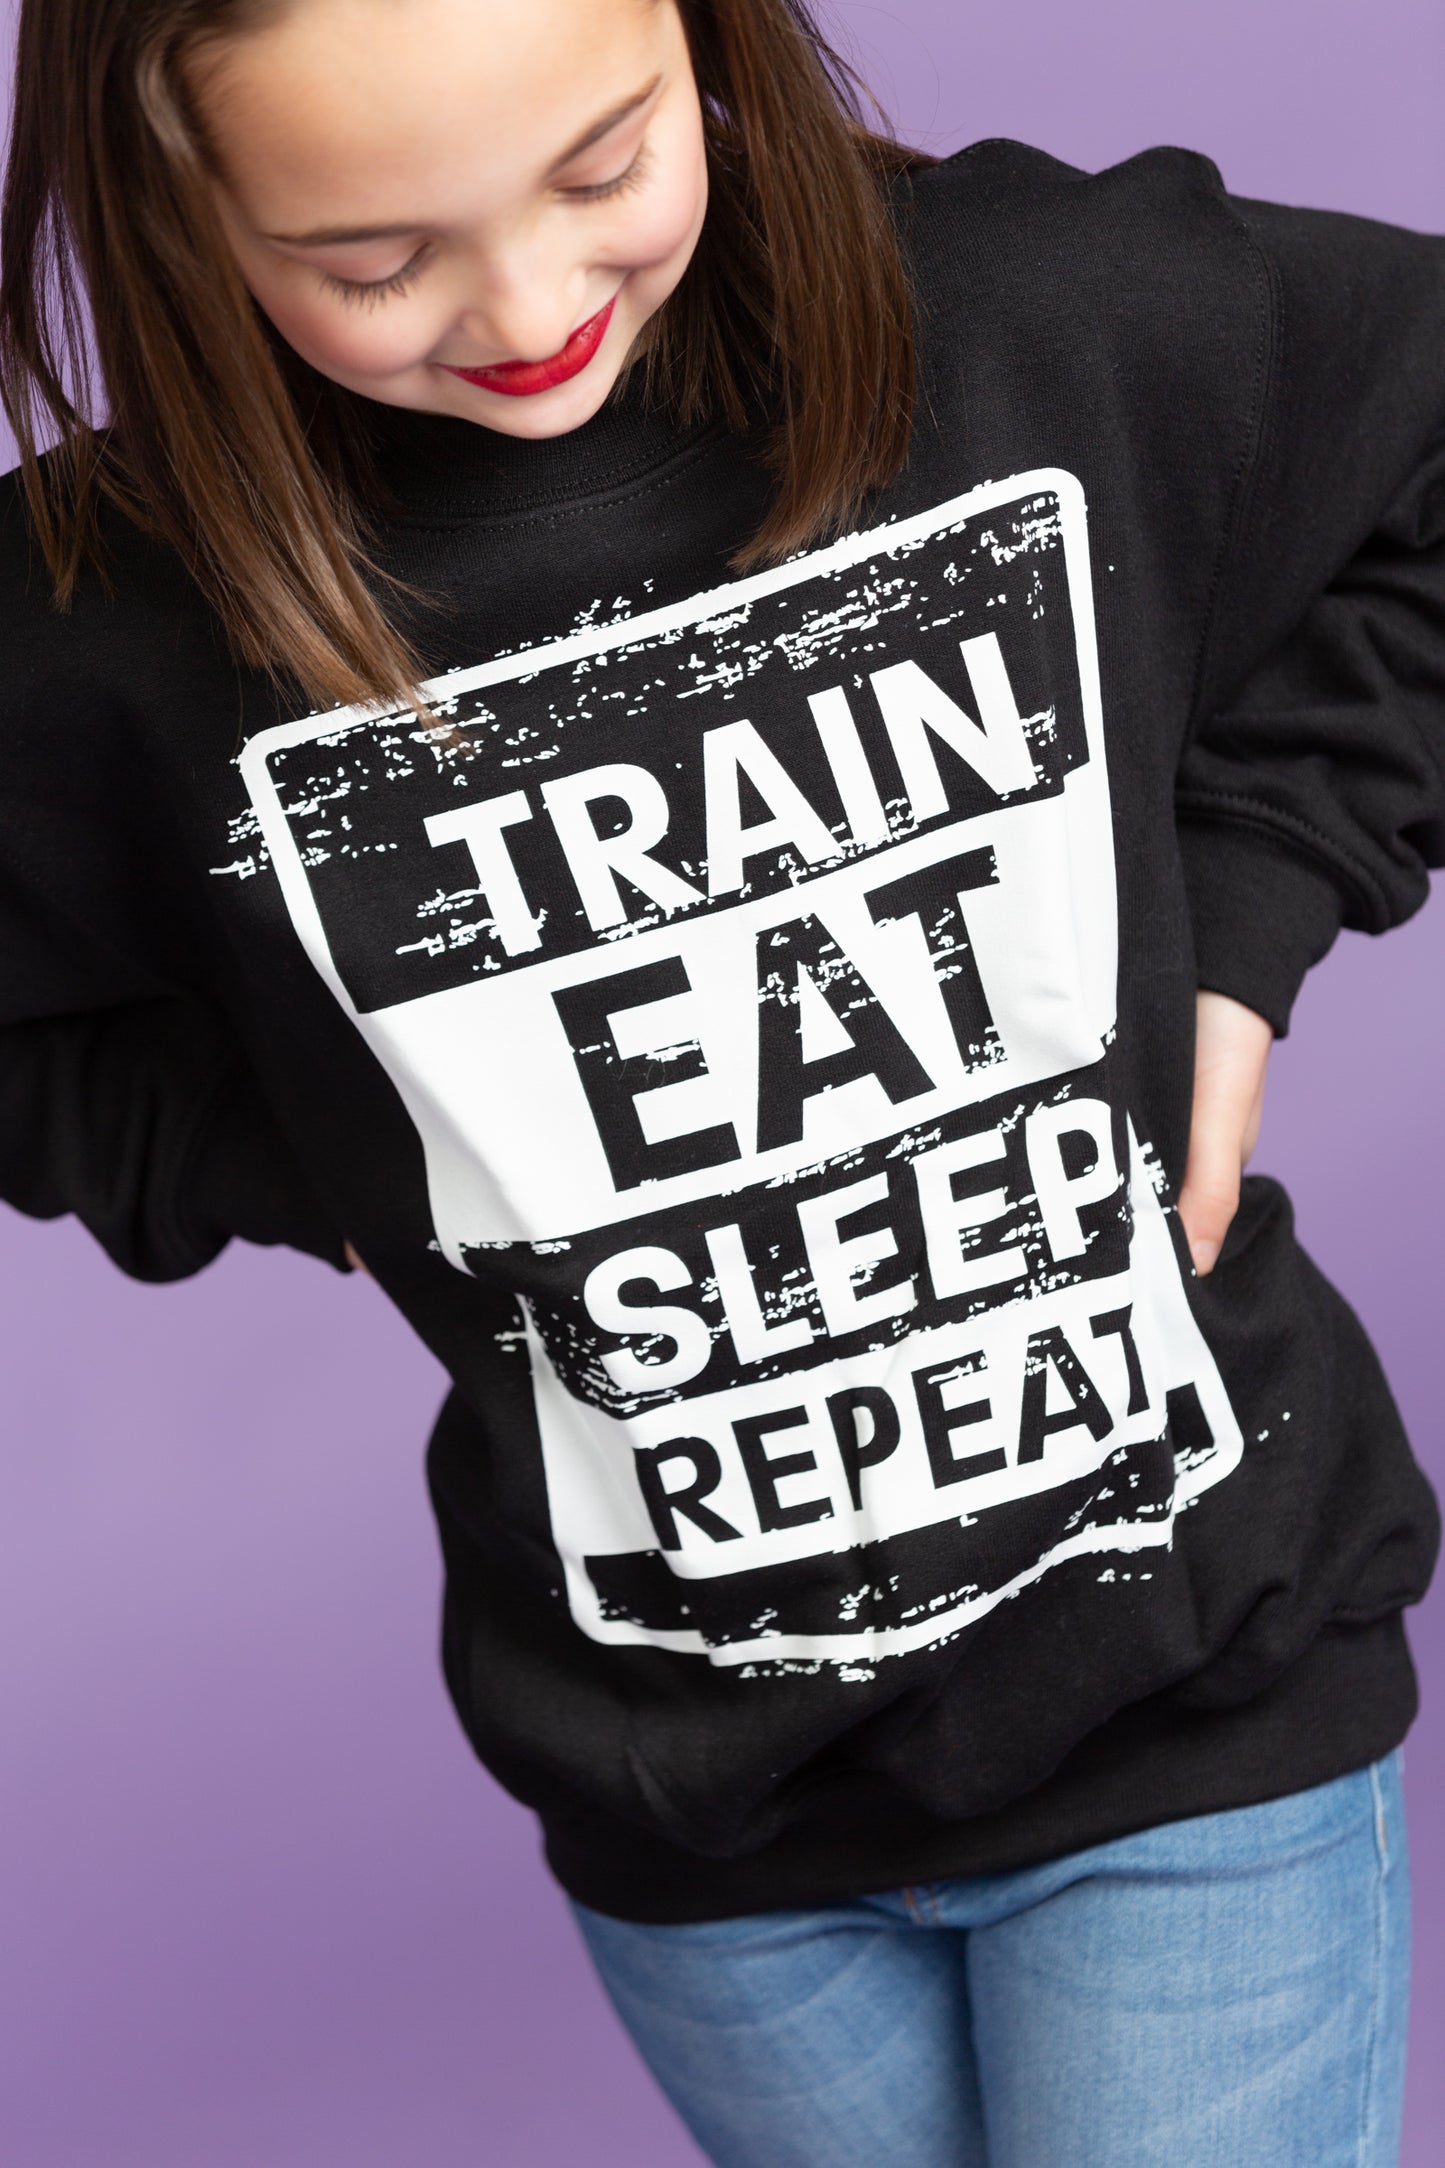 Train, Eat, Sleep, Repeat Black Crewneck Sweatshirt